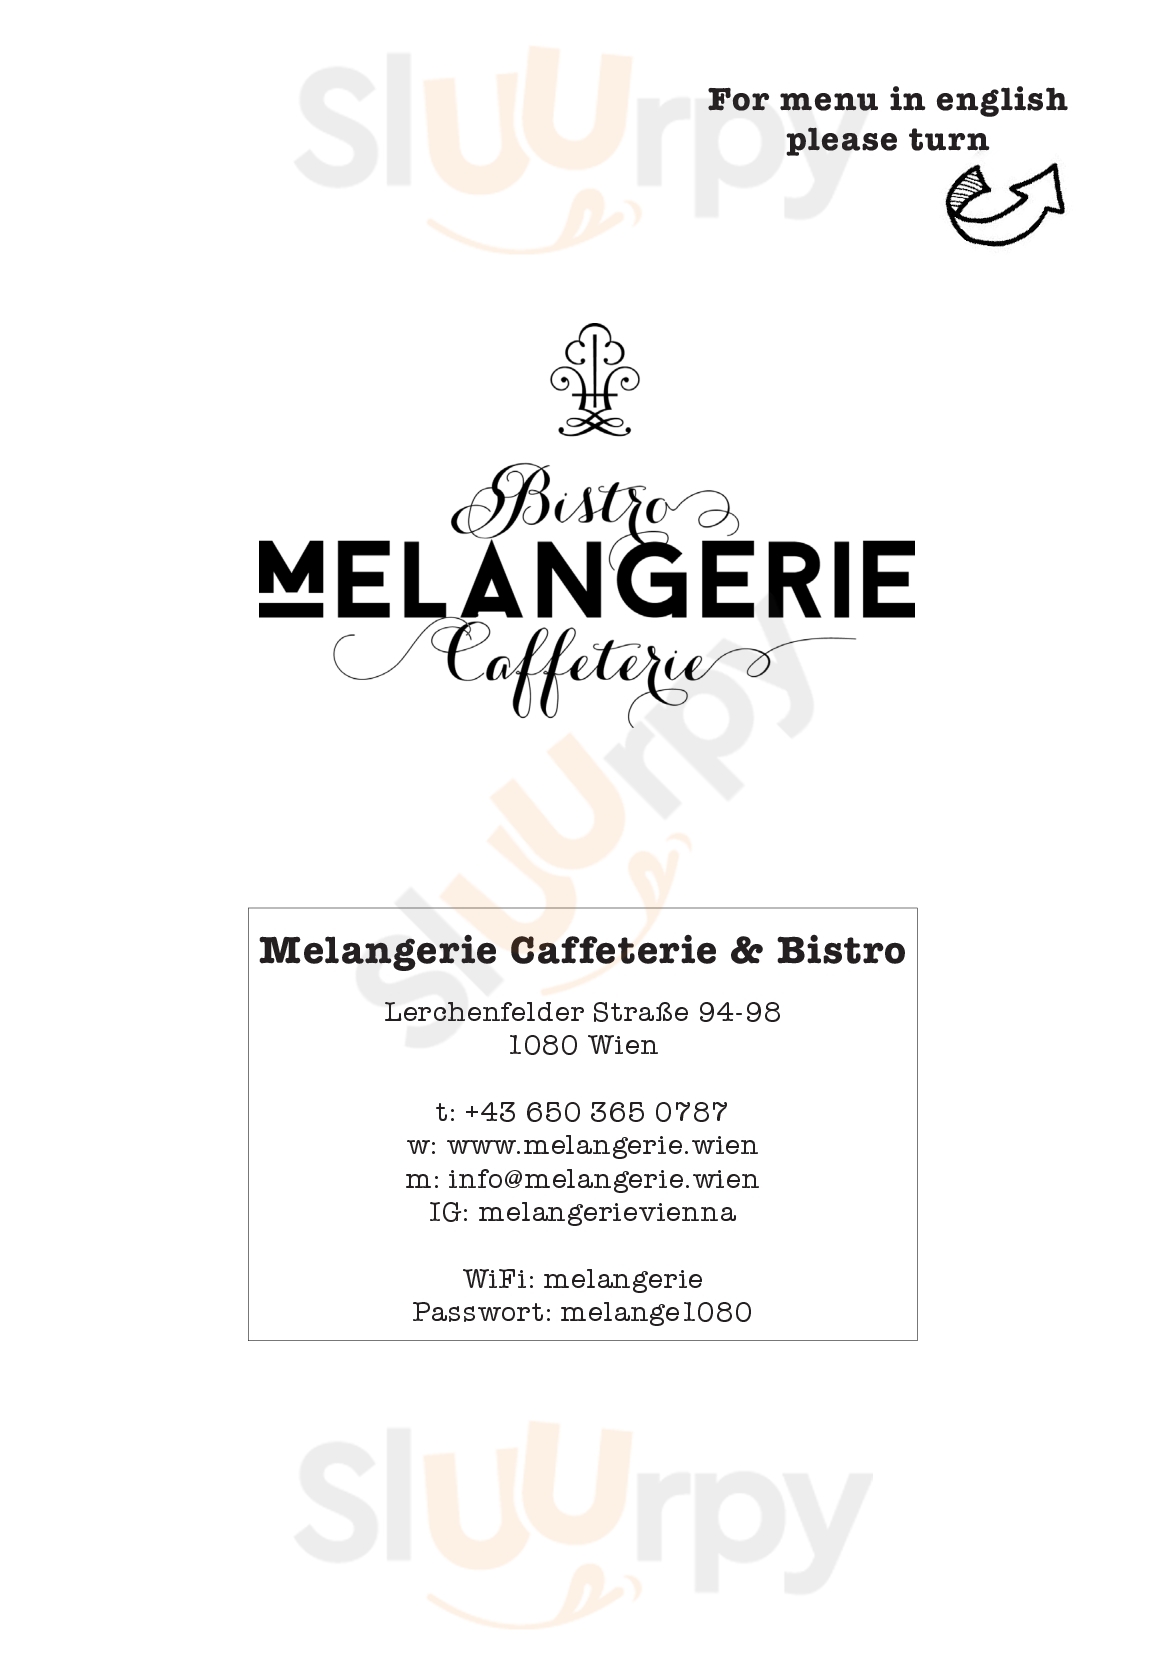 Melangerie - Caffeterie & Bistro Wien Menu - 1